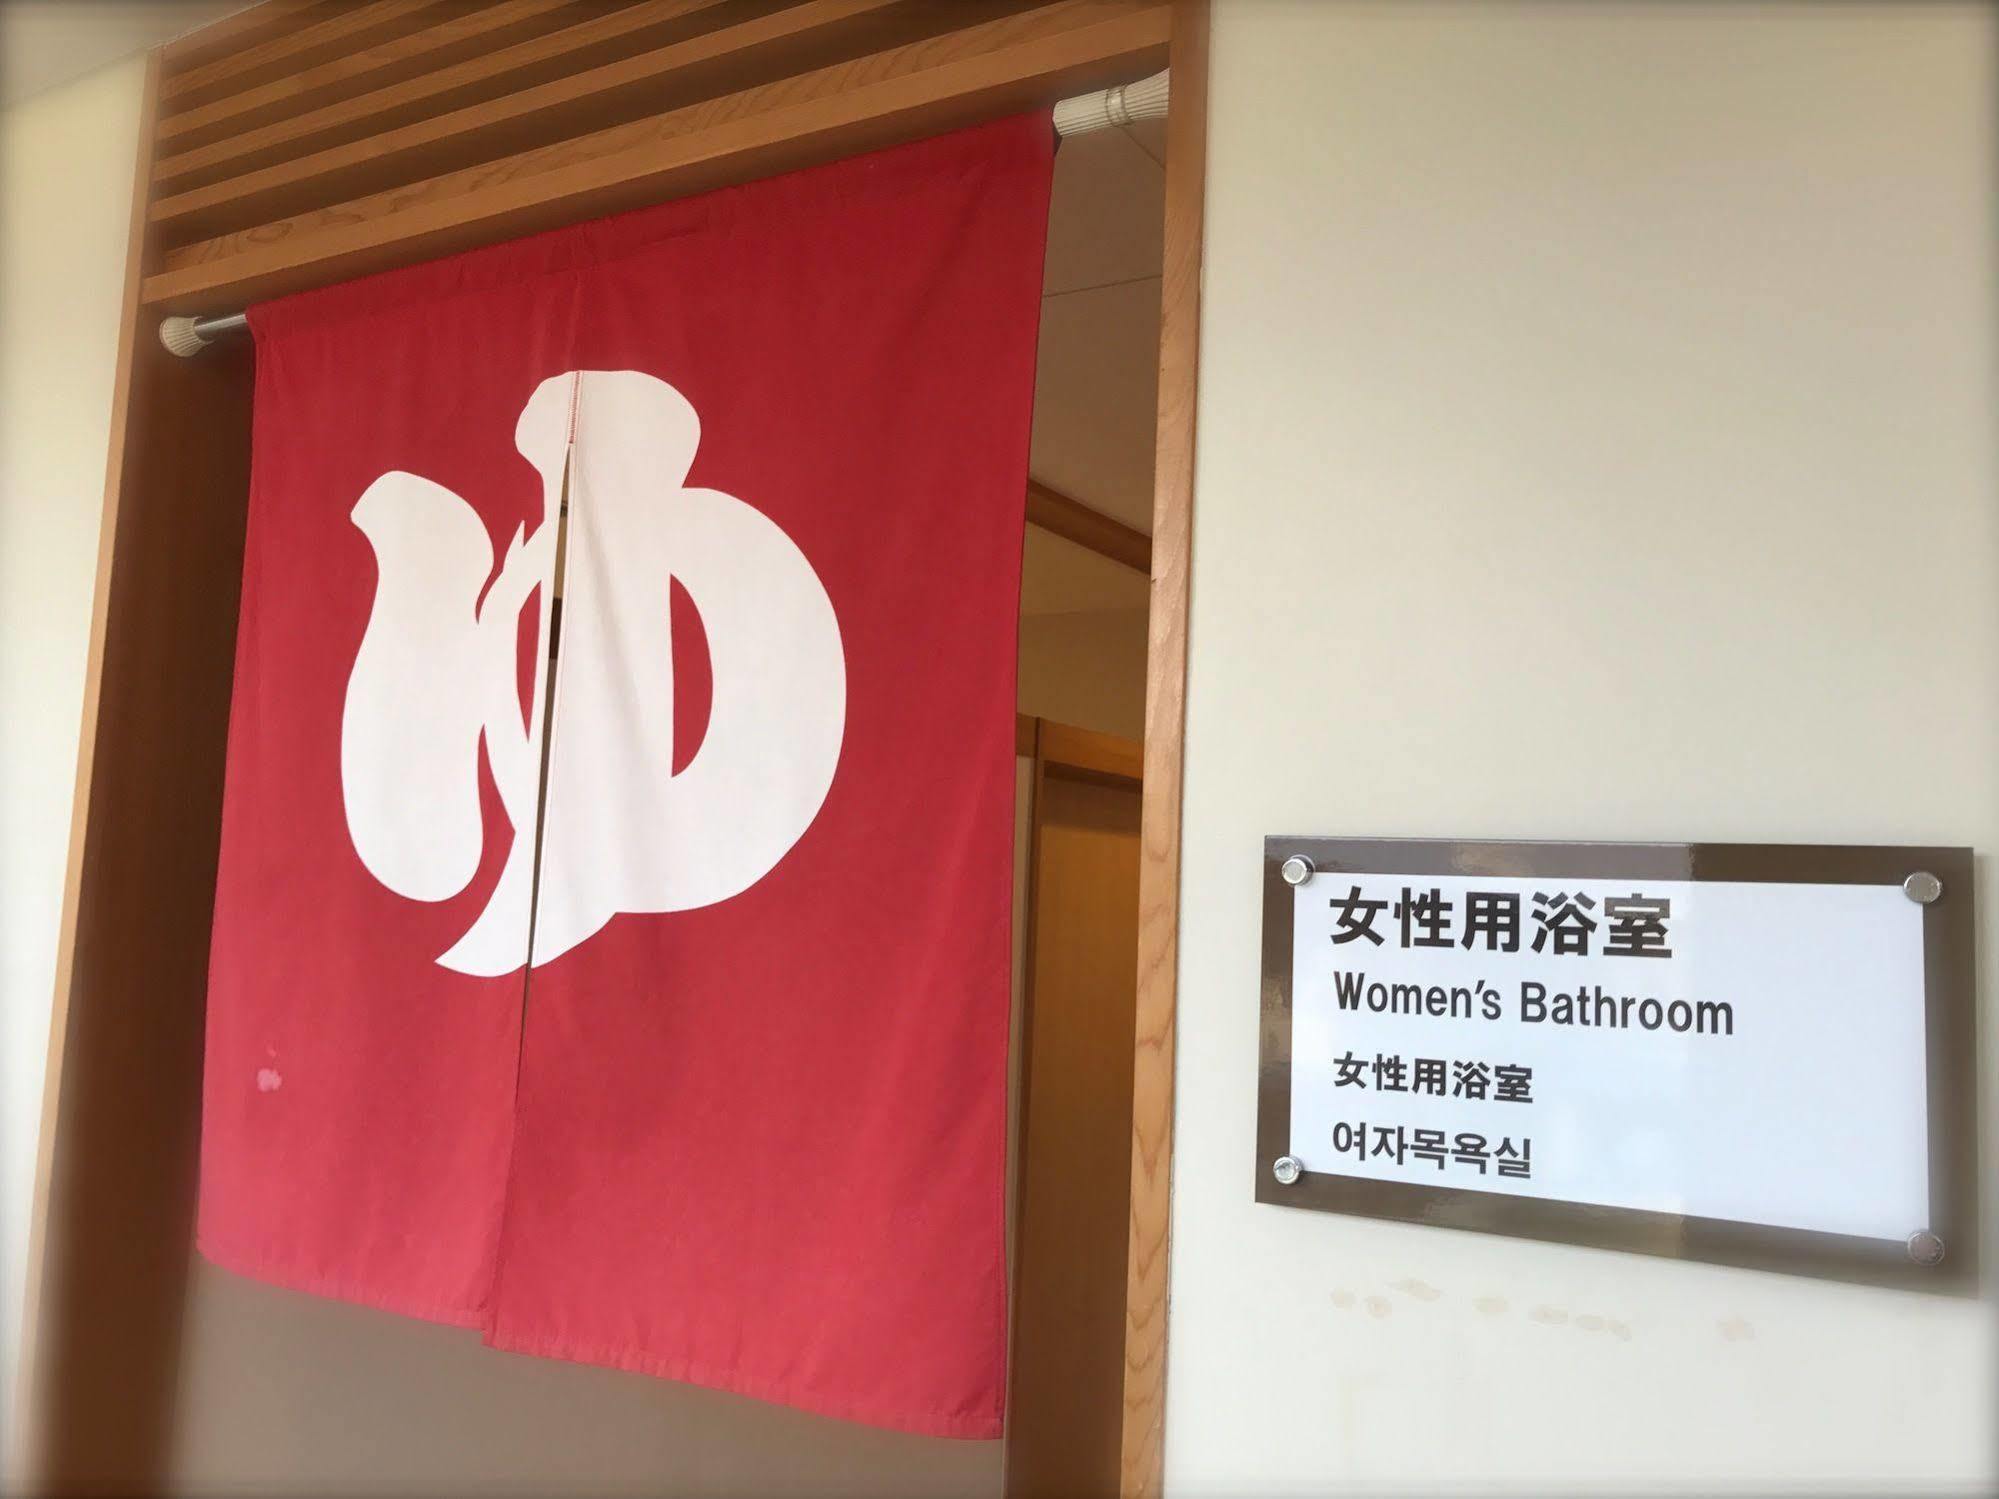 Kyoto Utano Youth Hostel Esterno foto